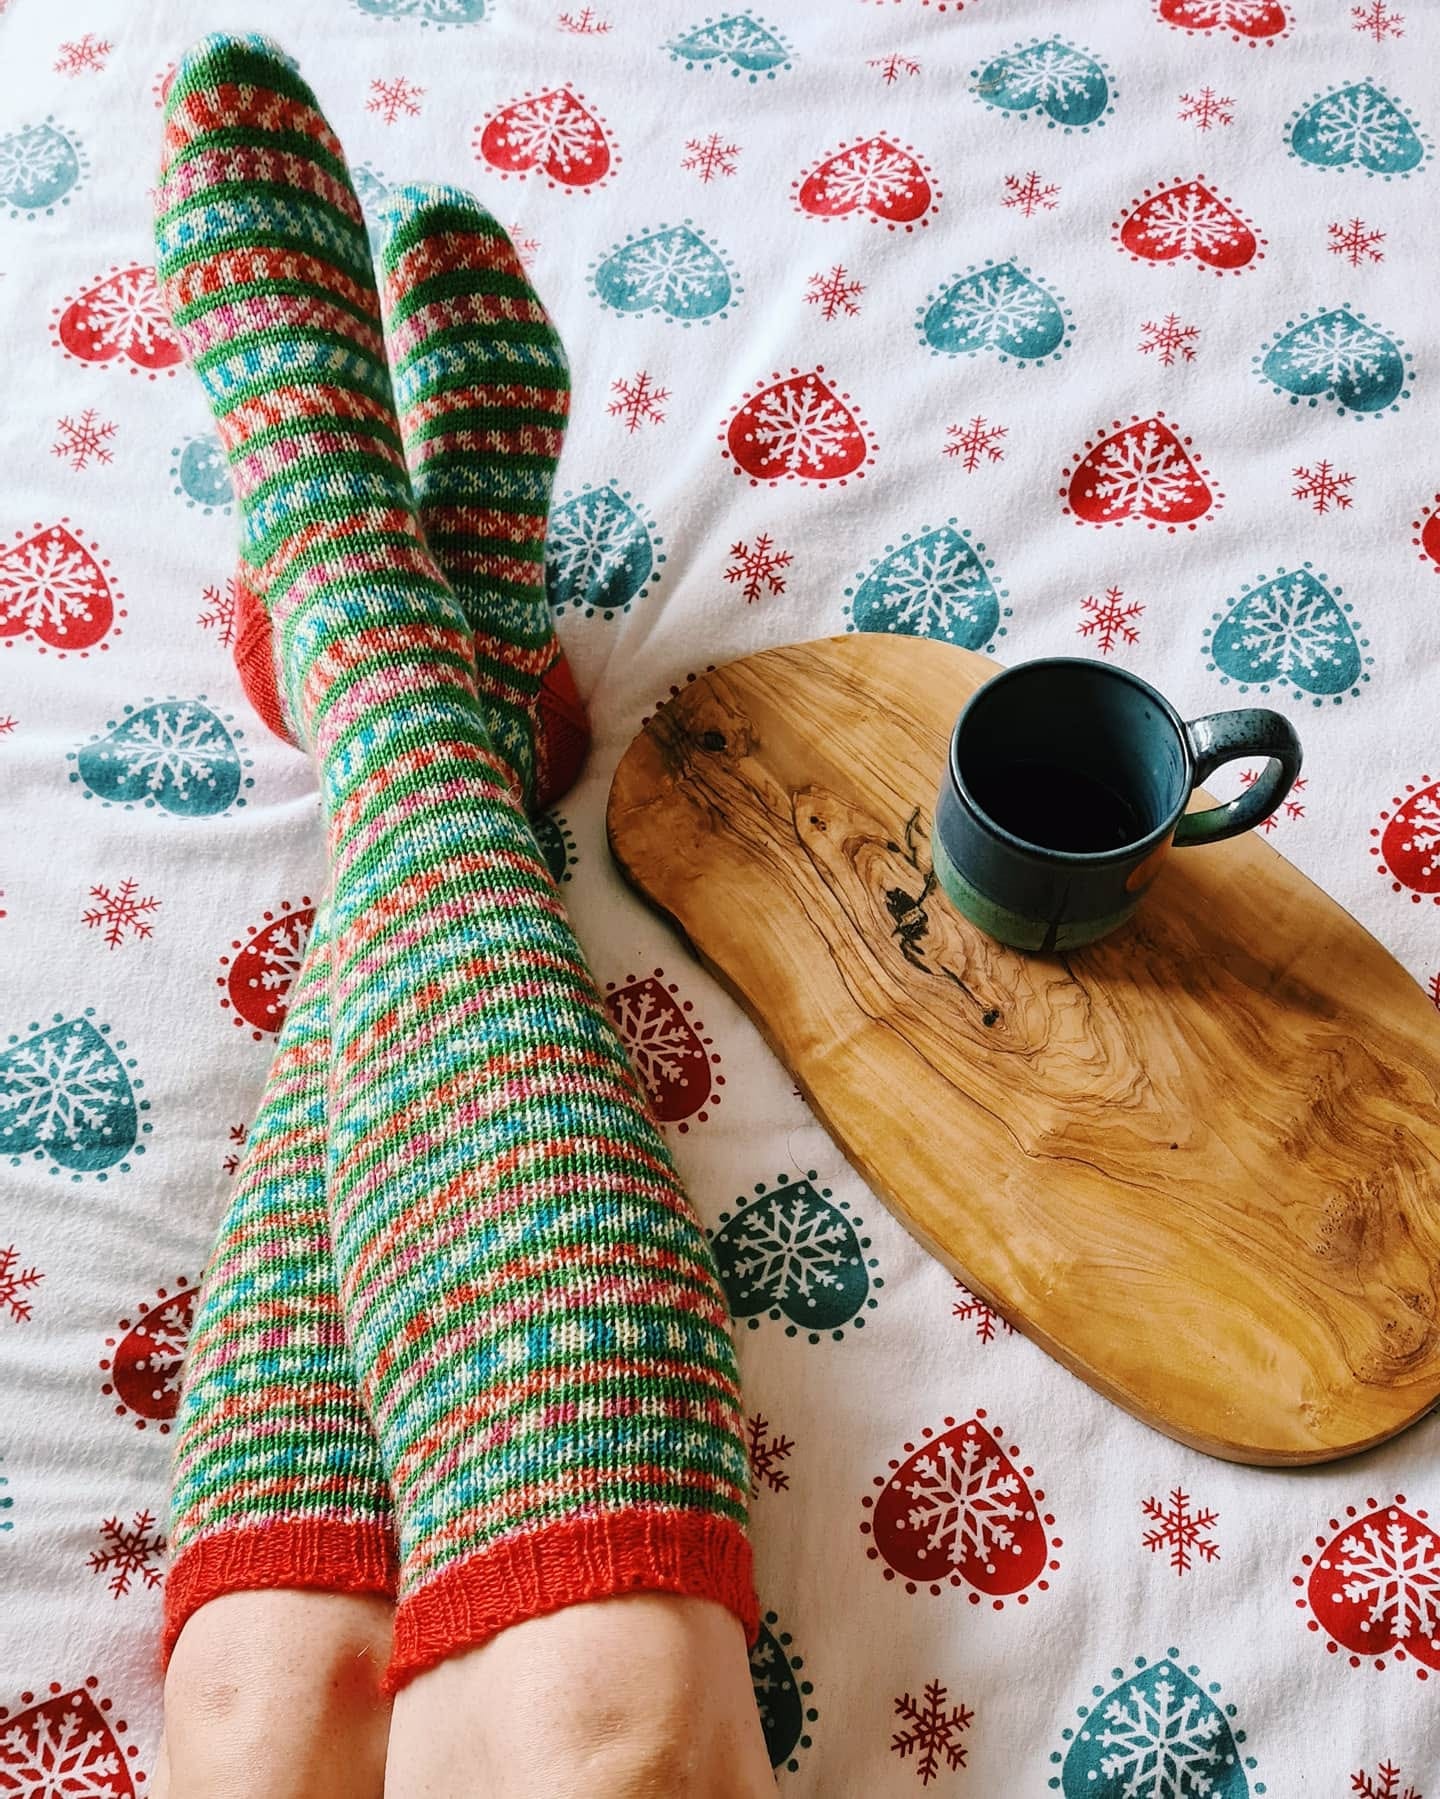 Everyday Knitter Blog — Louise Tilbrook Designs